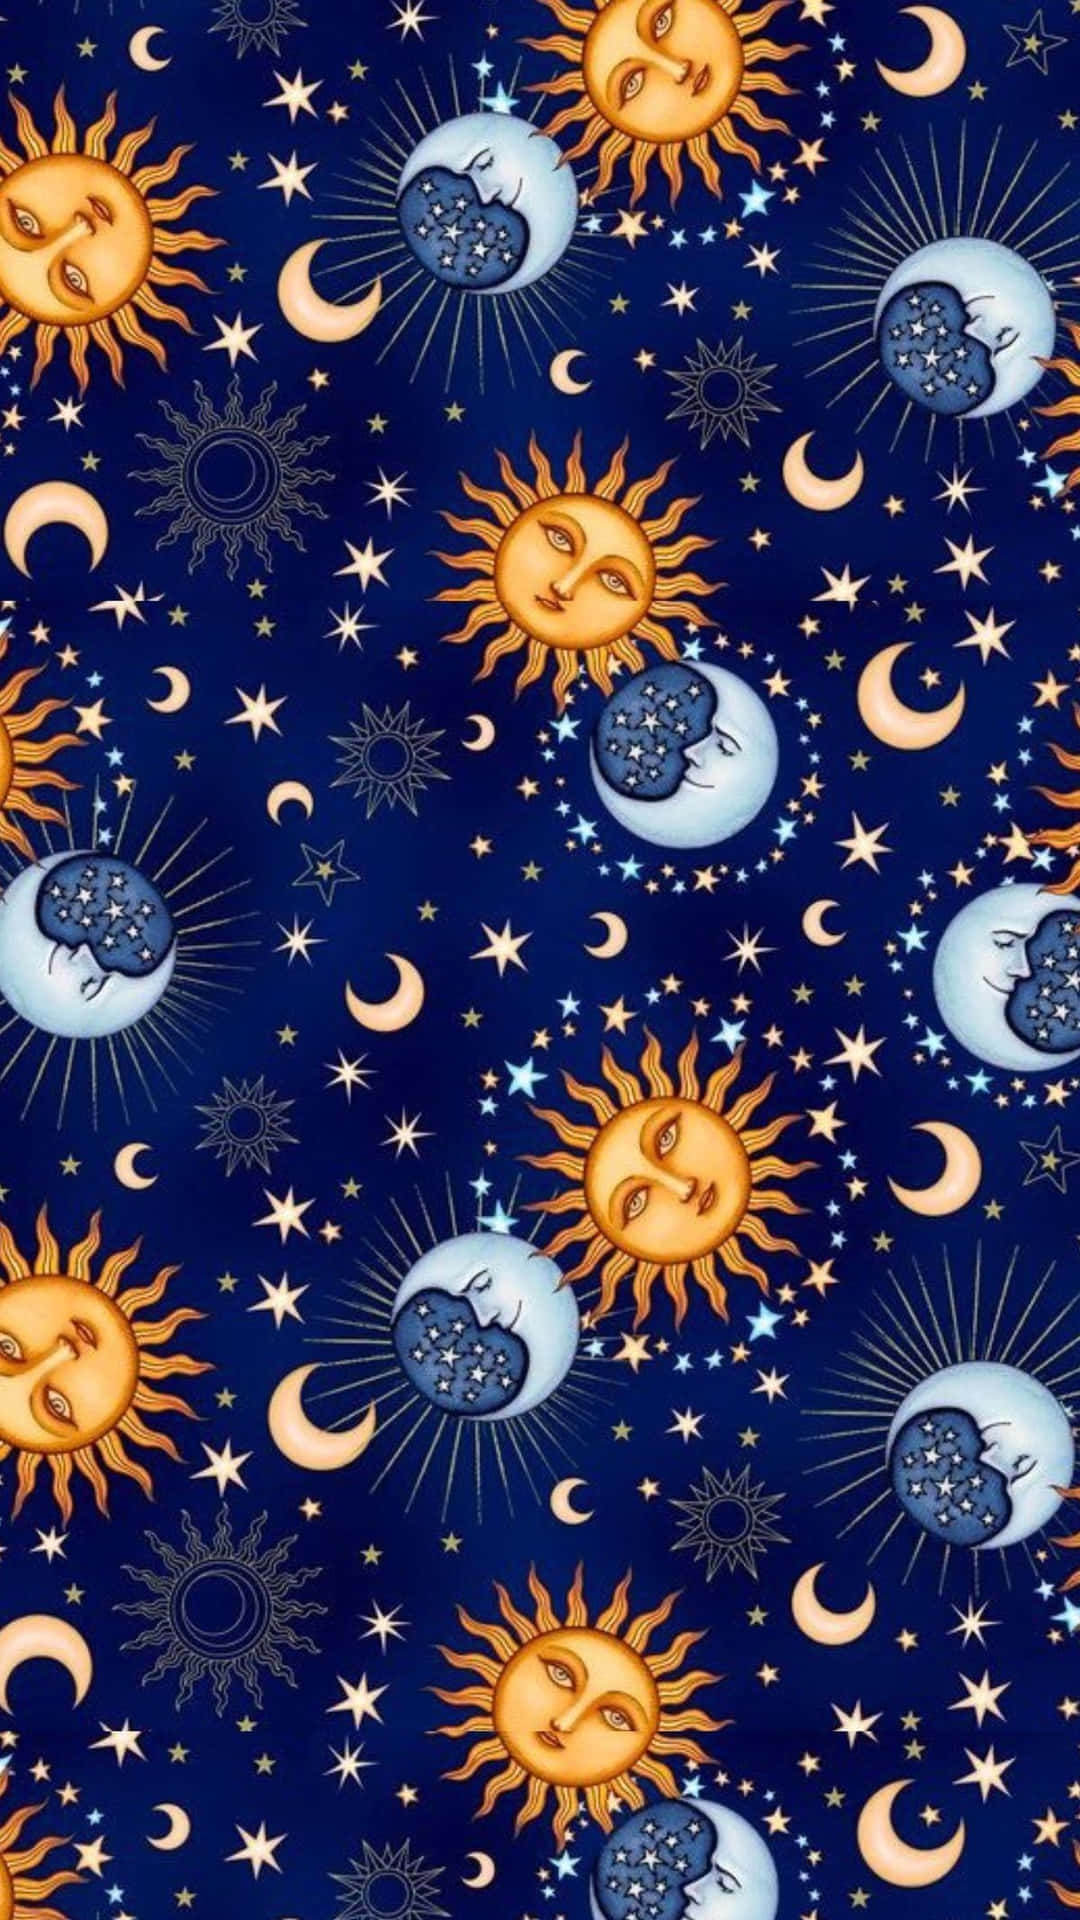 Celestial Dance - Sun and Moon in Harmony Wallpaper